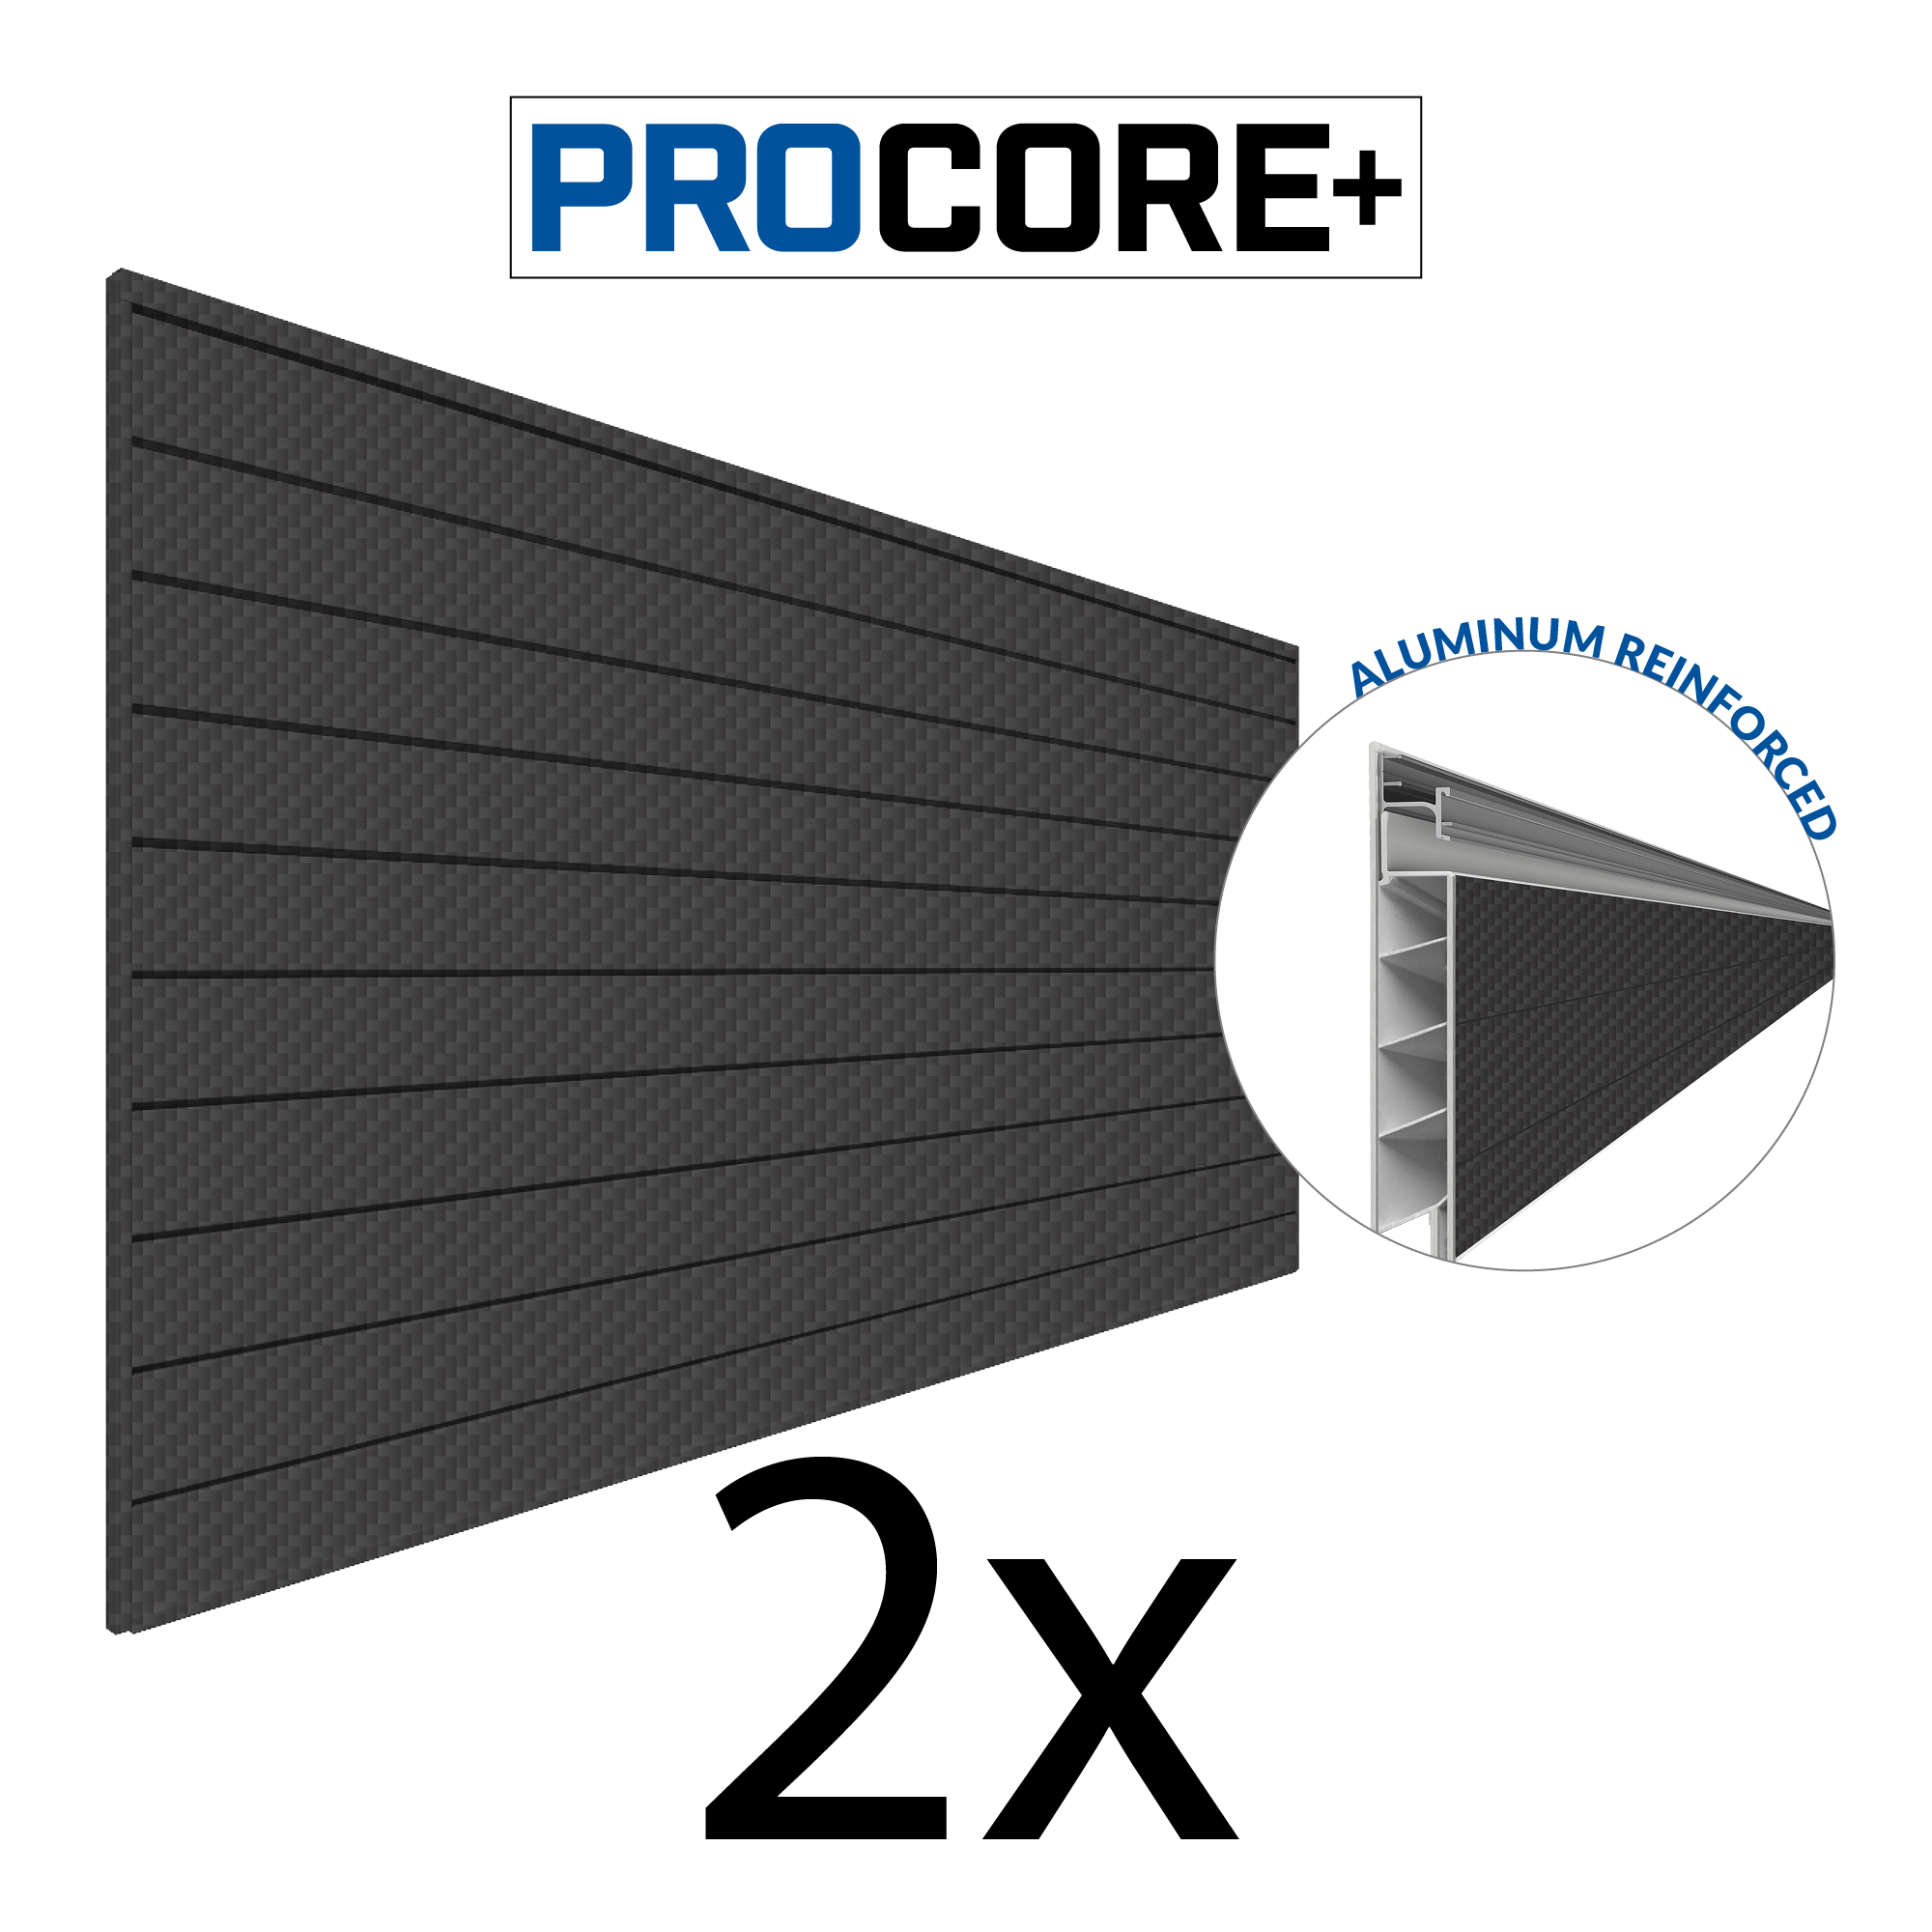 4 x 8 ft. PROCORE+ Black Carbon Fiber PVC Slatwall – 2 Pack 64 sq ft